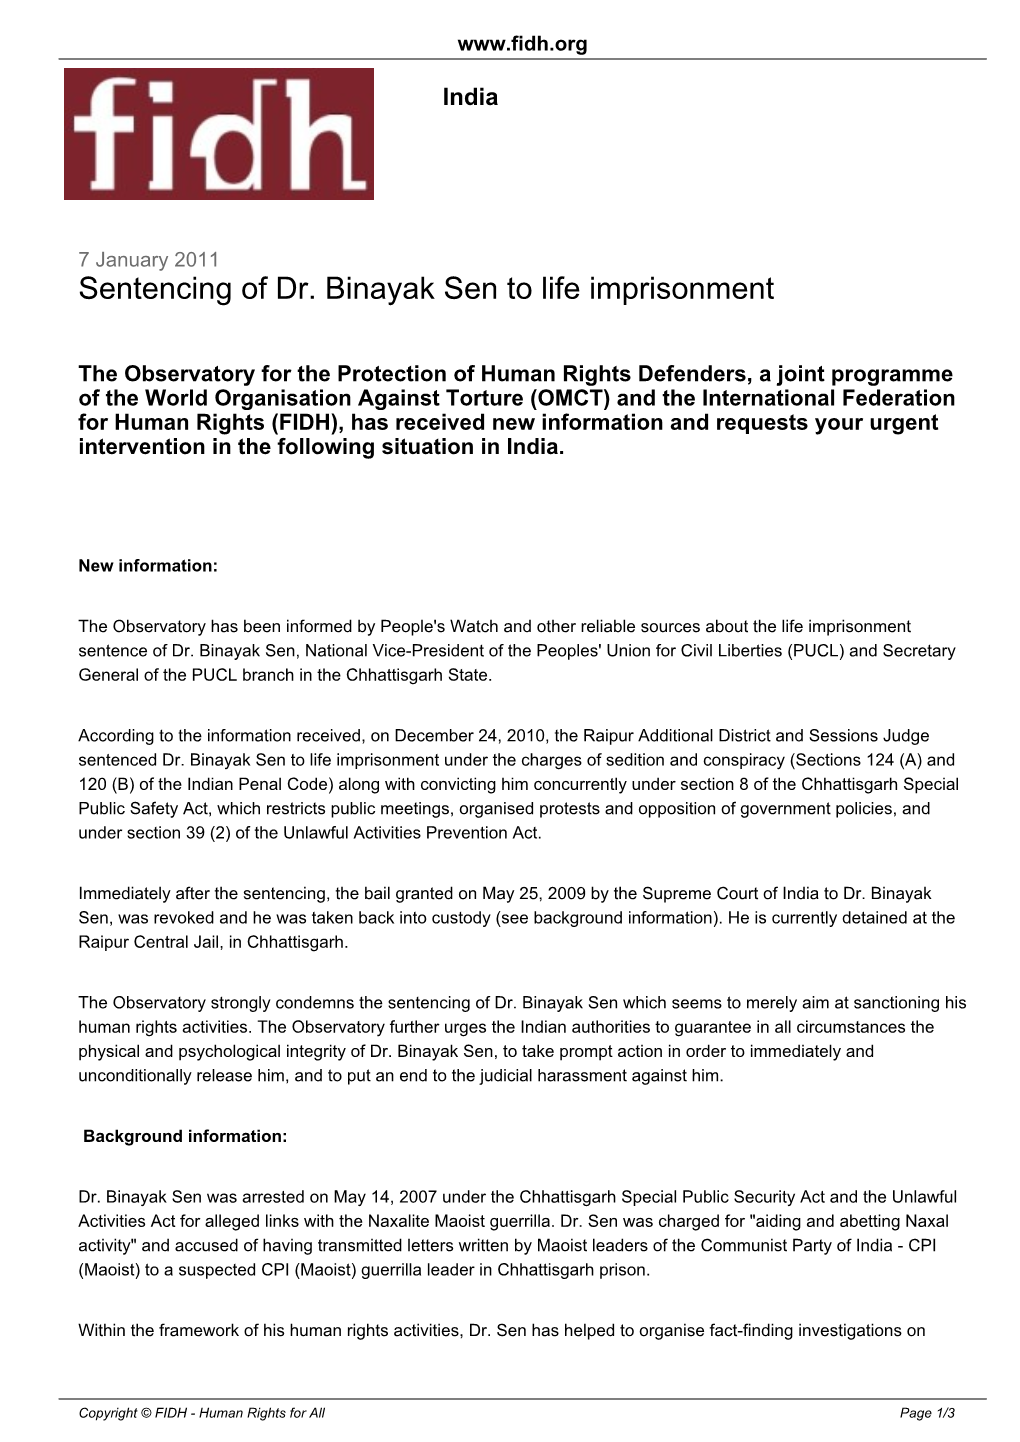 Sentencing of Dr. Binayak Sen to Life Imprisonment